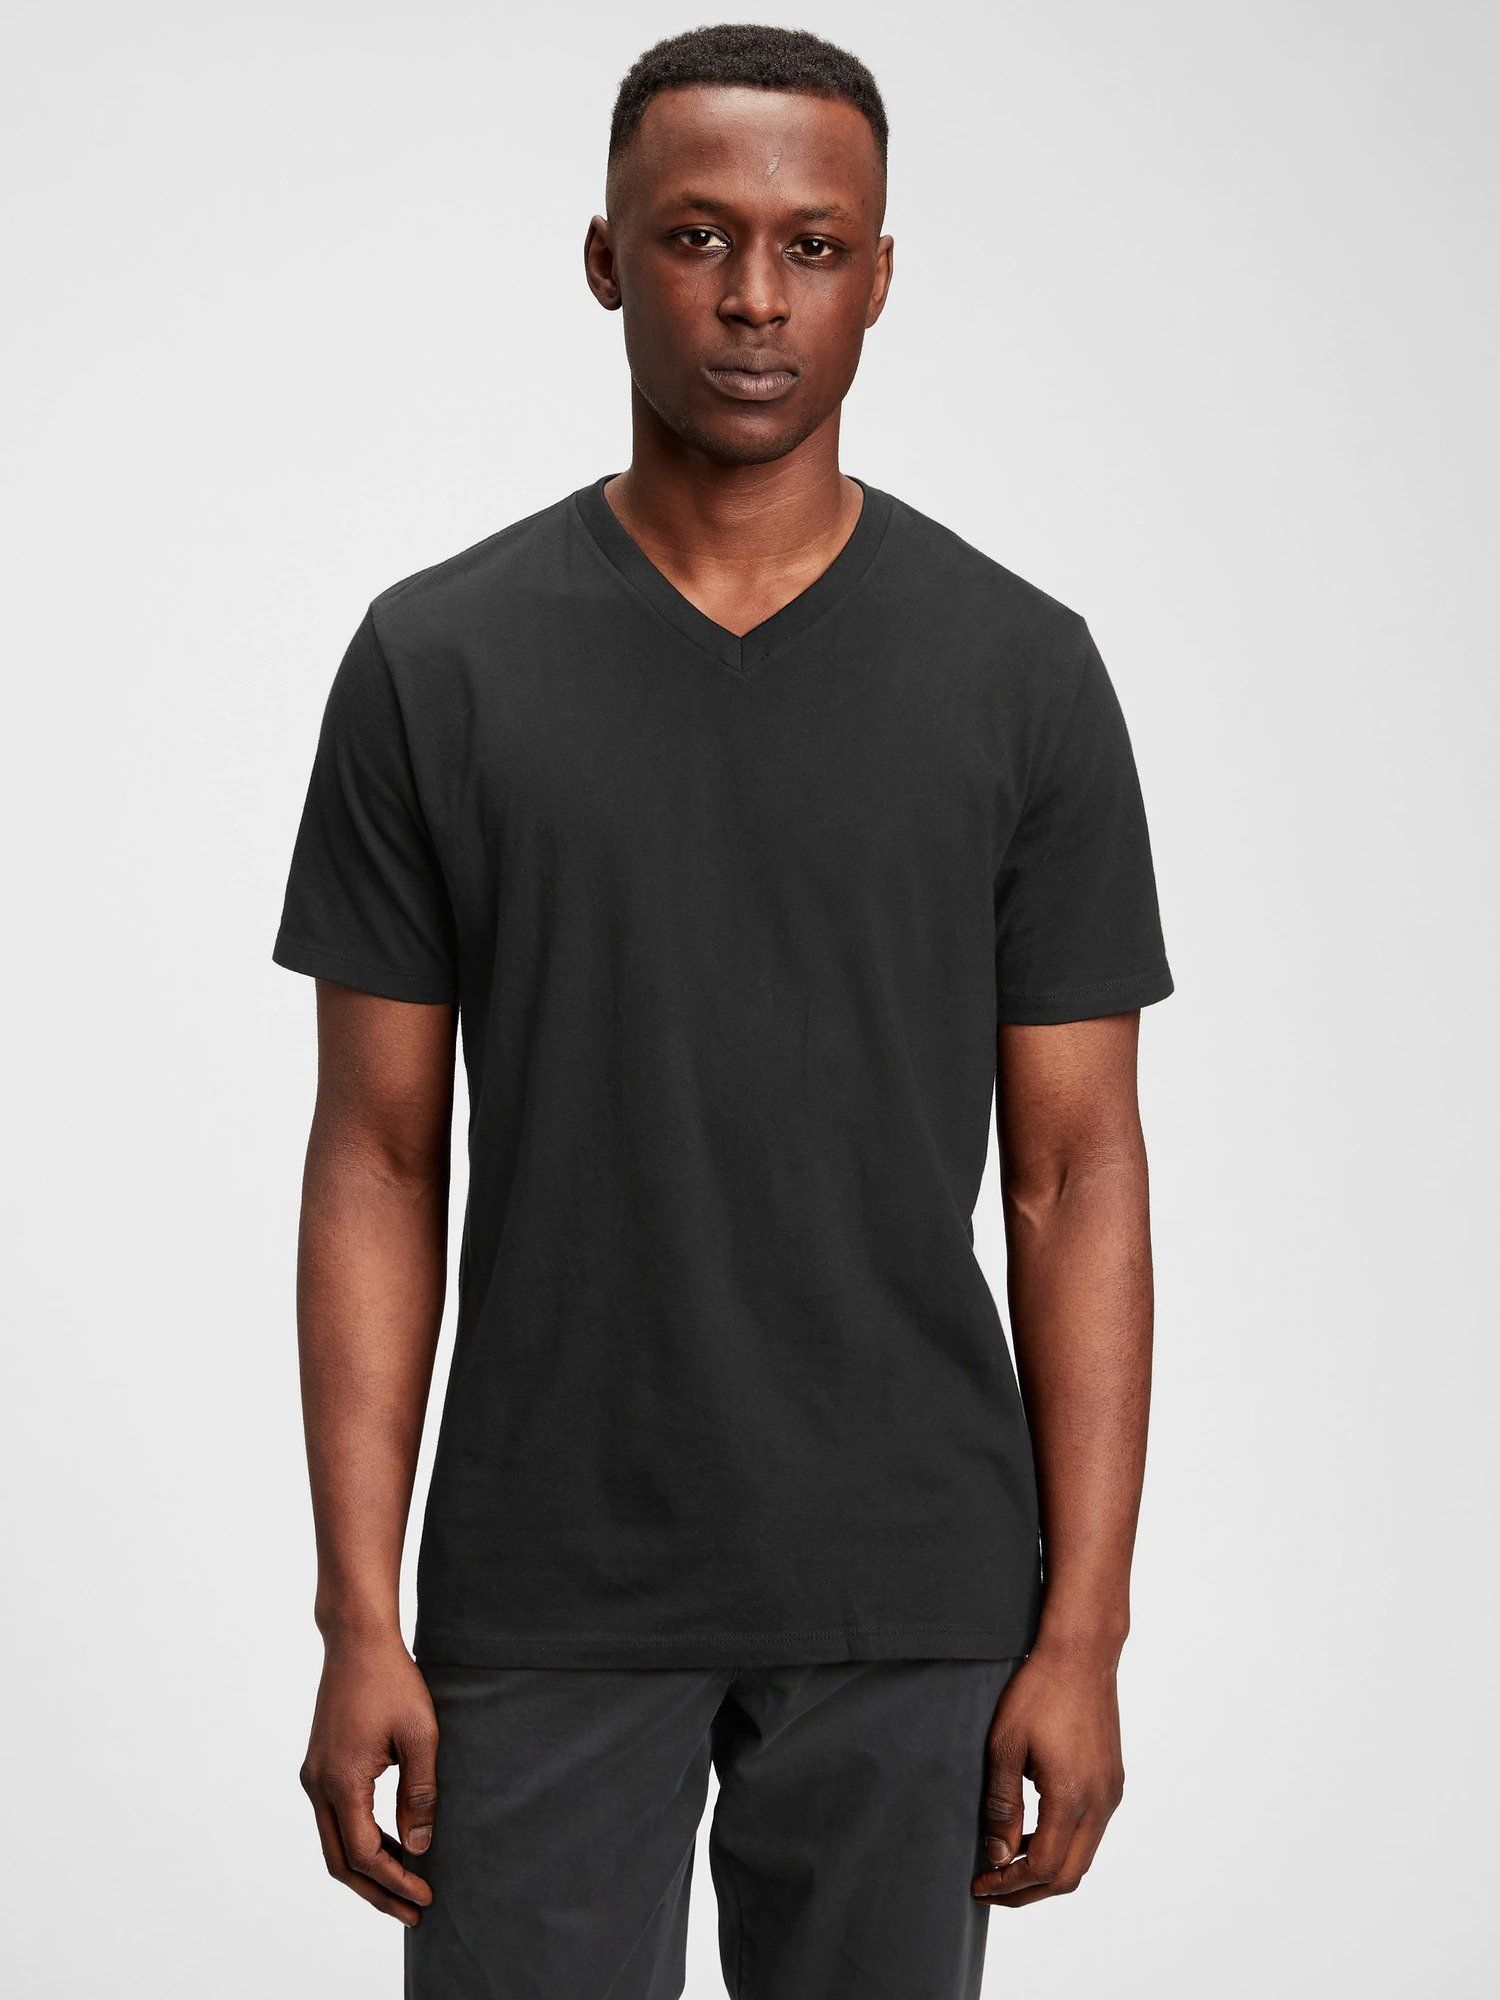 13 Best Black T-Shirts for Men The Strategist